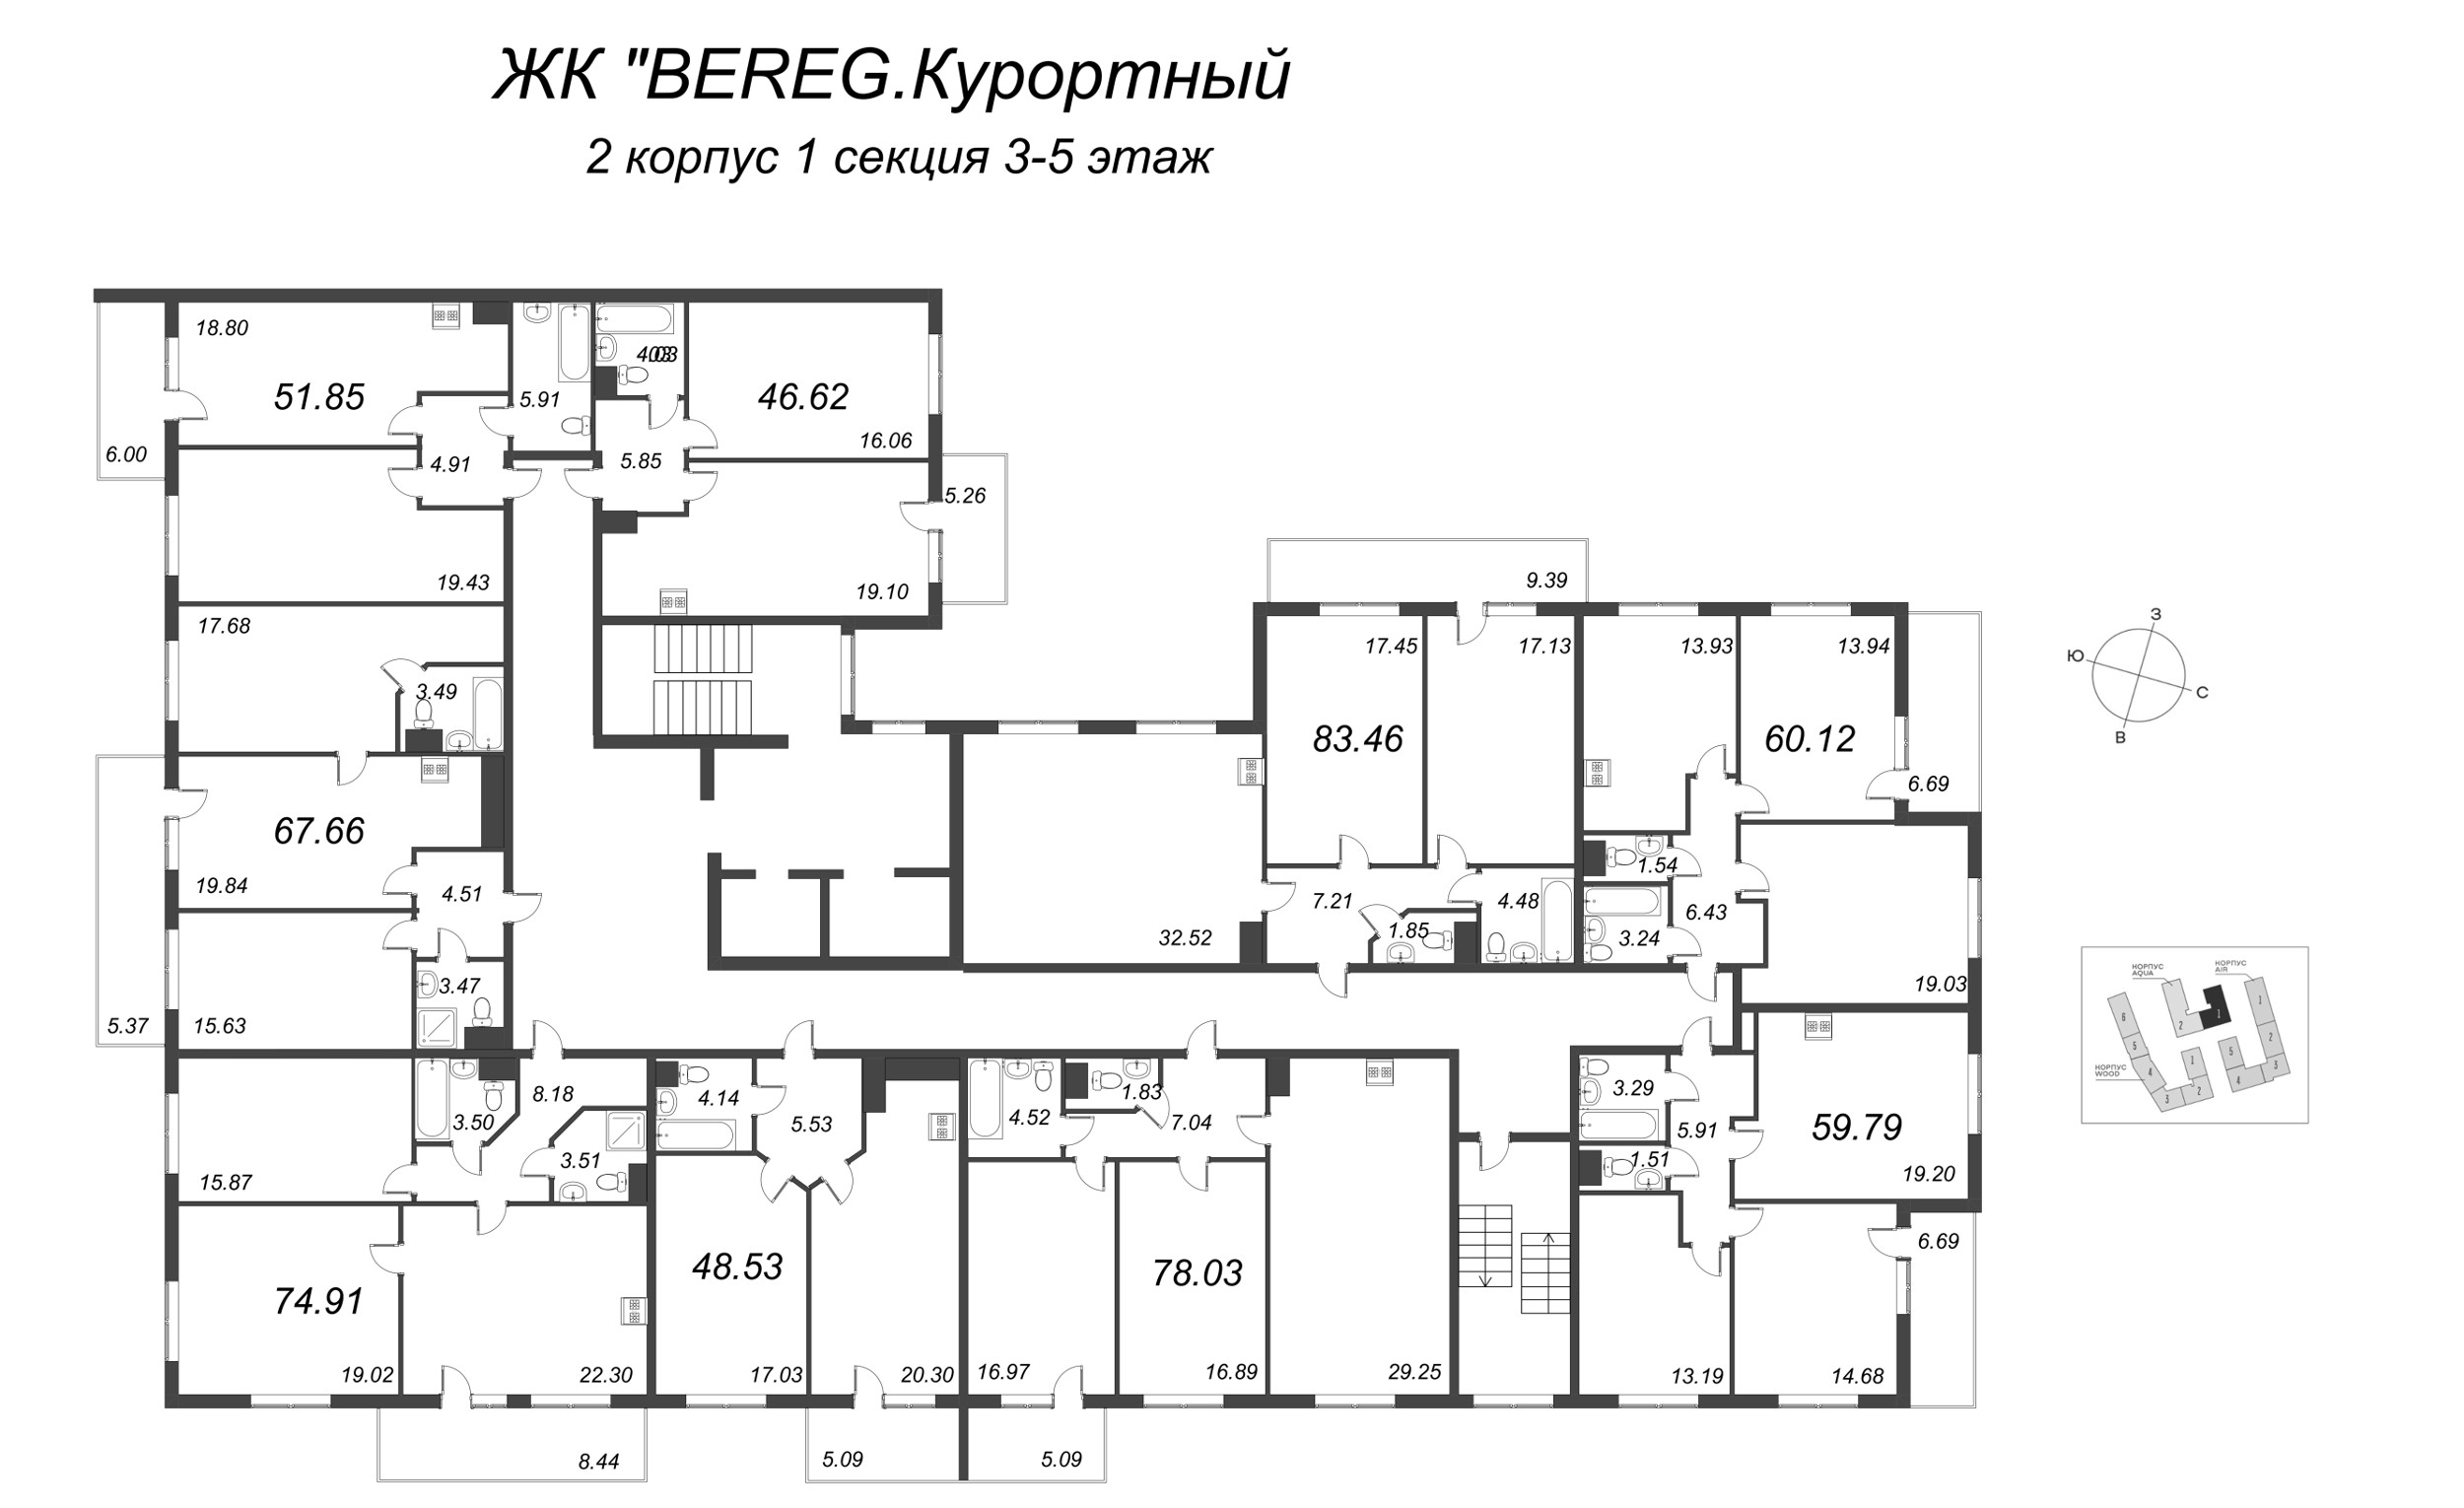 3-комнатная (Евро) квартира, 74.91 м² - планировка этажа